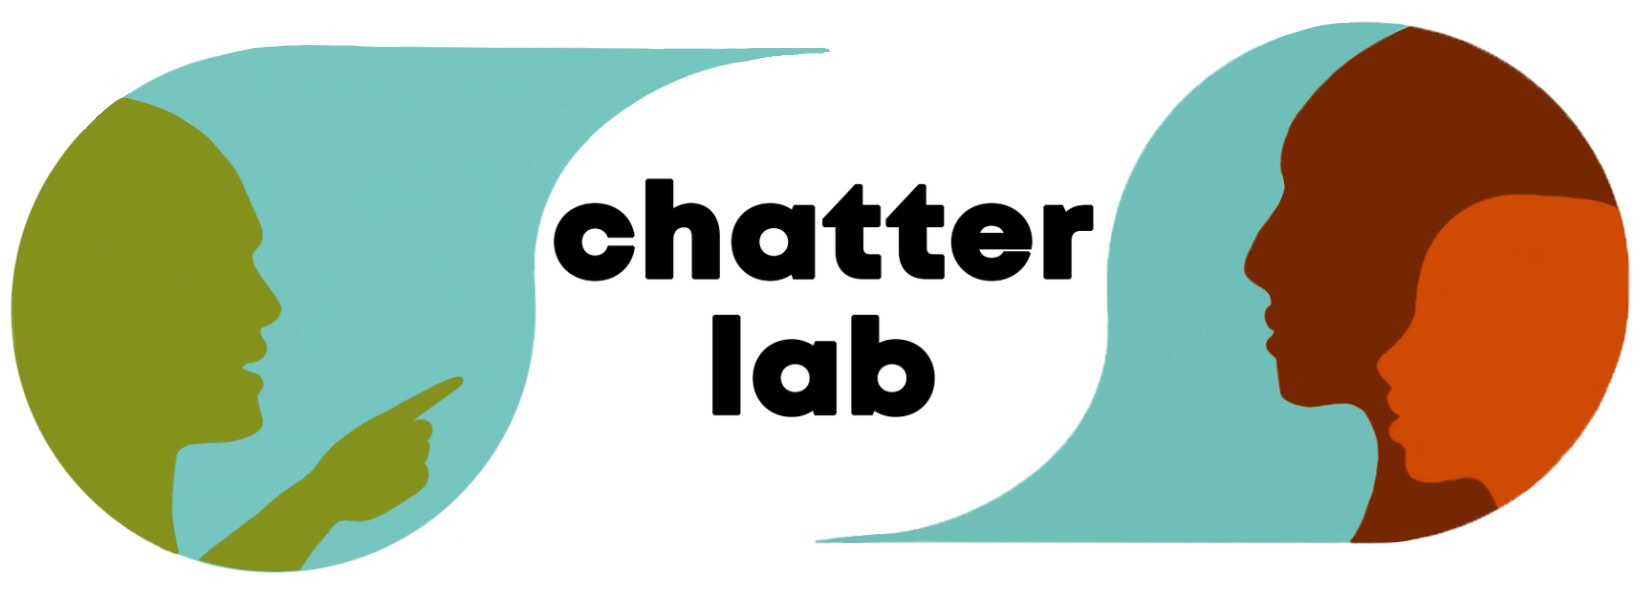 chatterlab logo